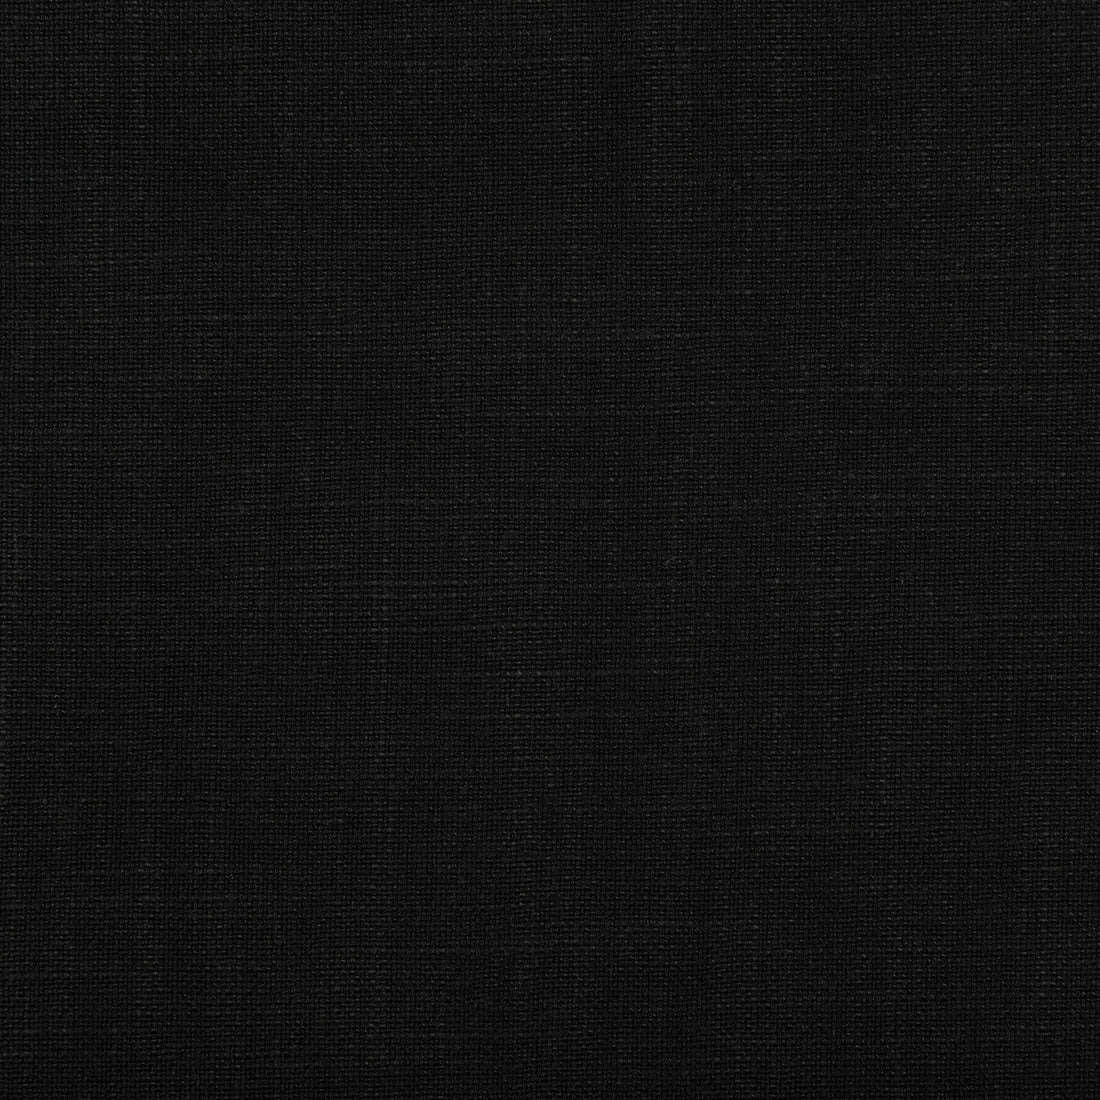 Aura fabric in noir color - pattern 35520.8.0 - by Kravet Design